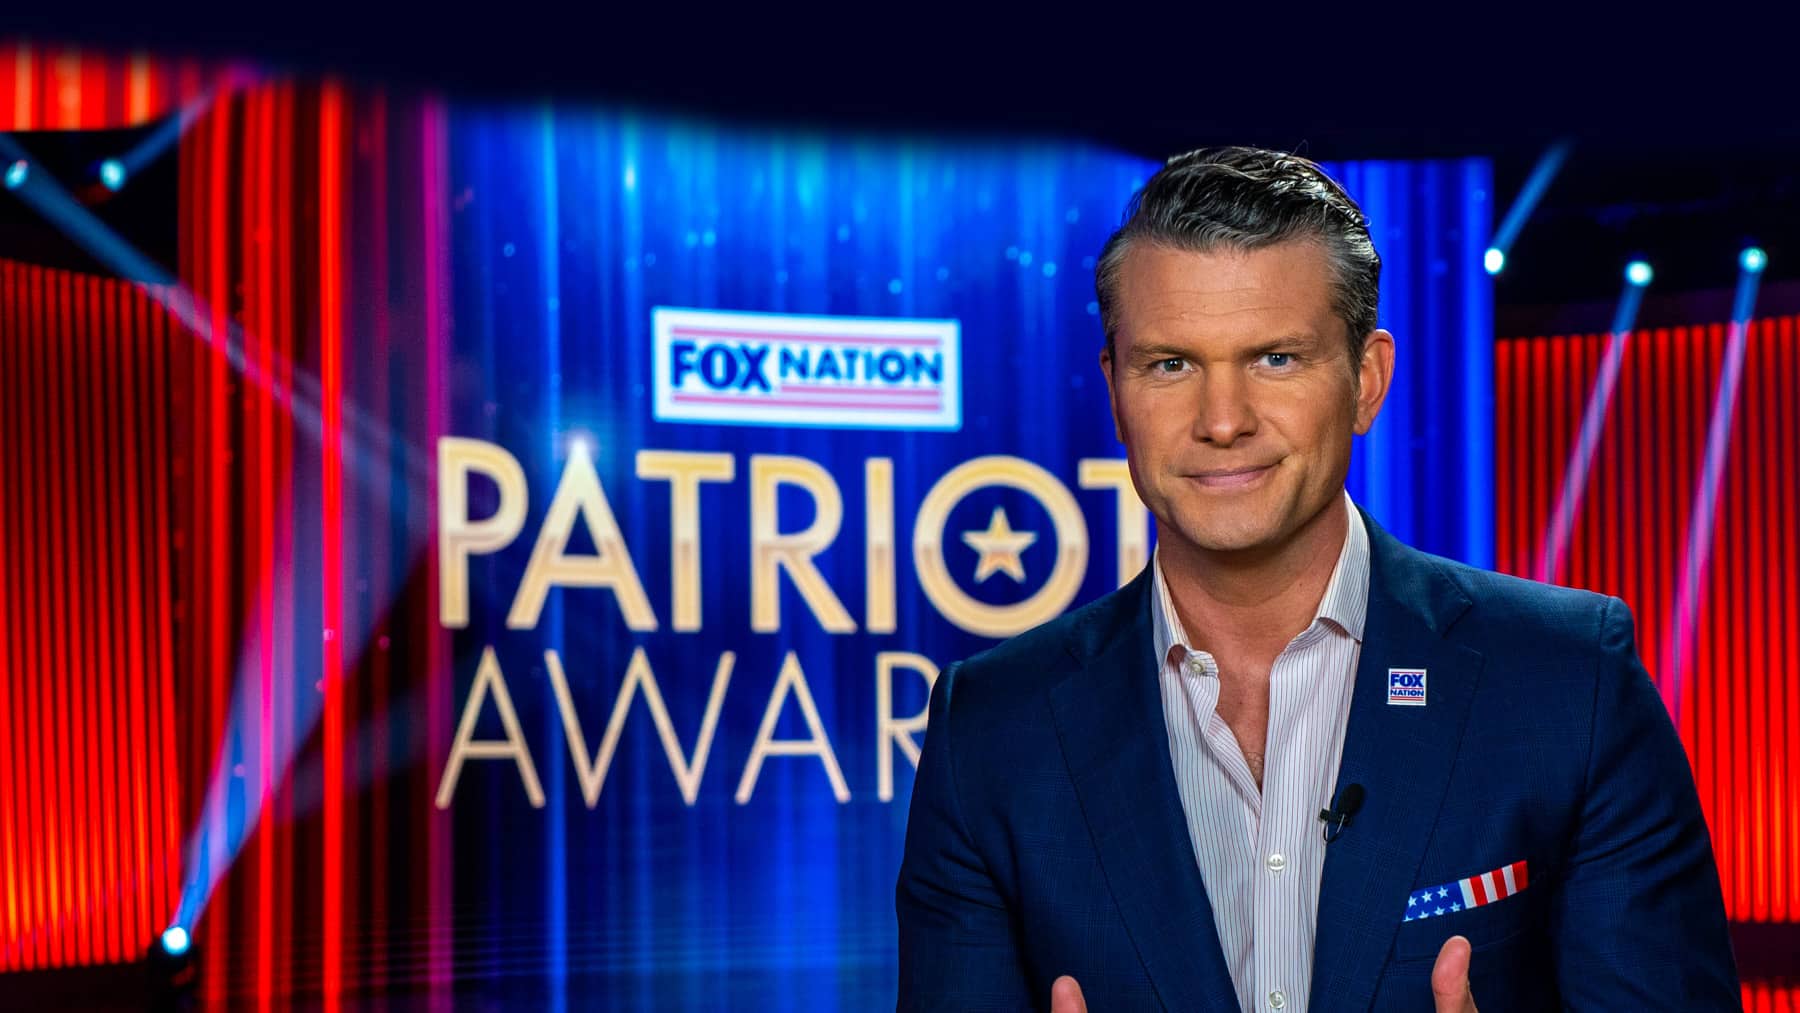 Patriot Awards Host Pete Hegseth